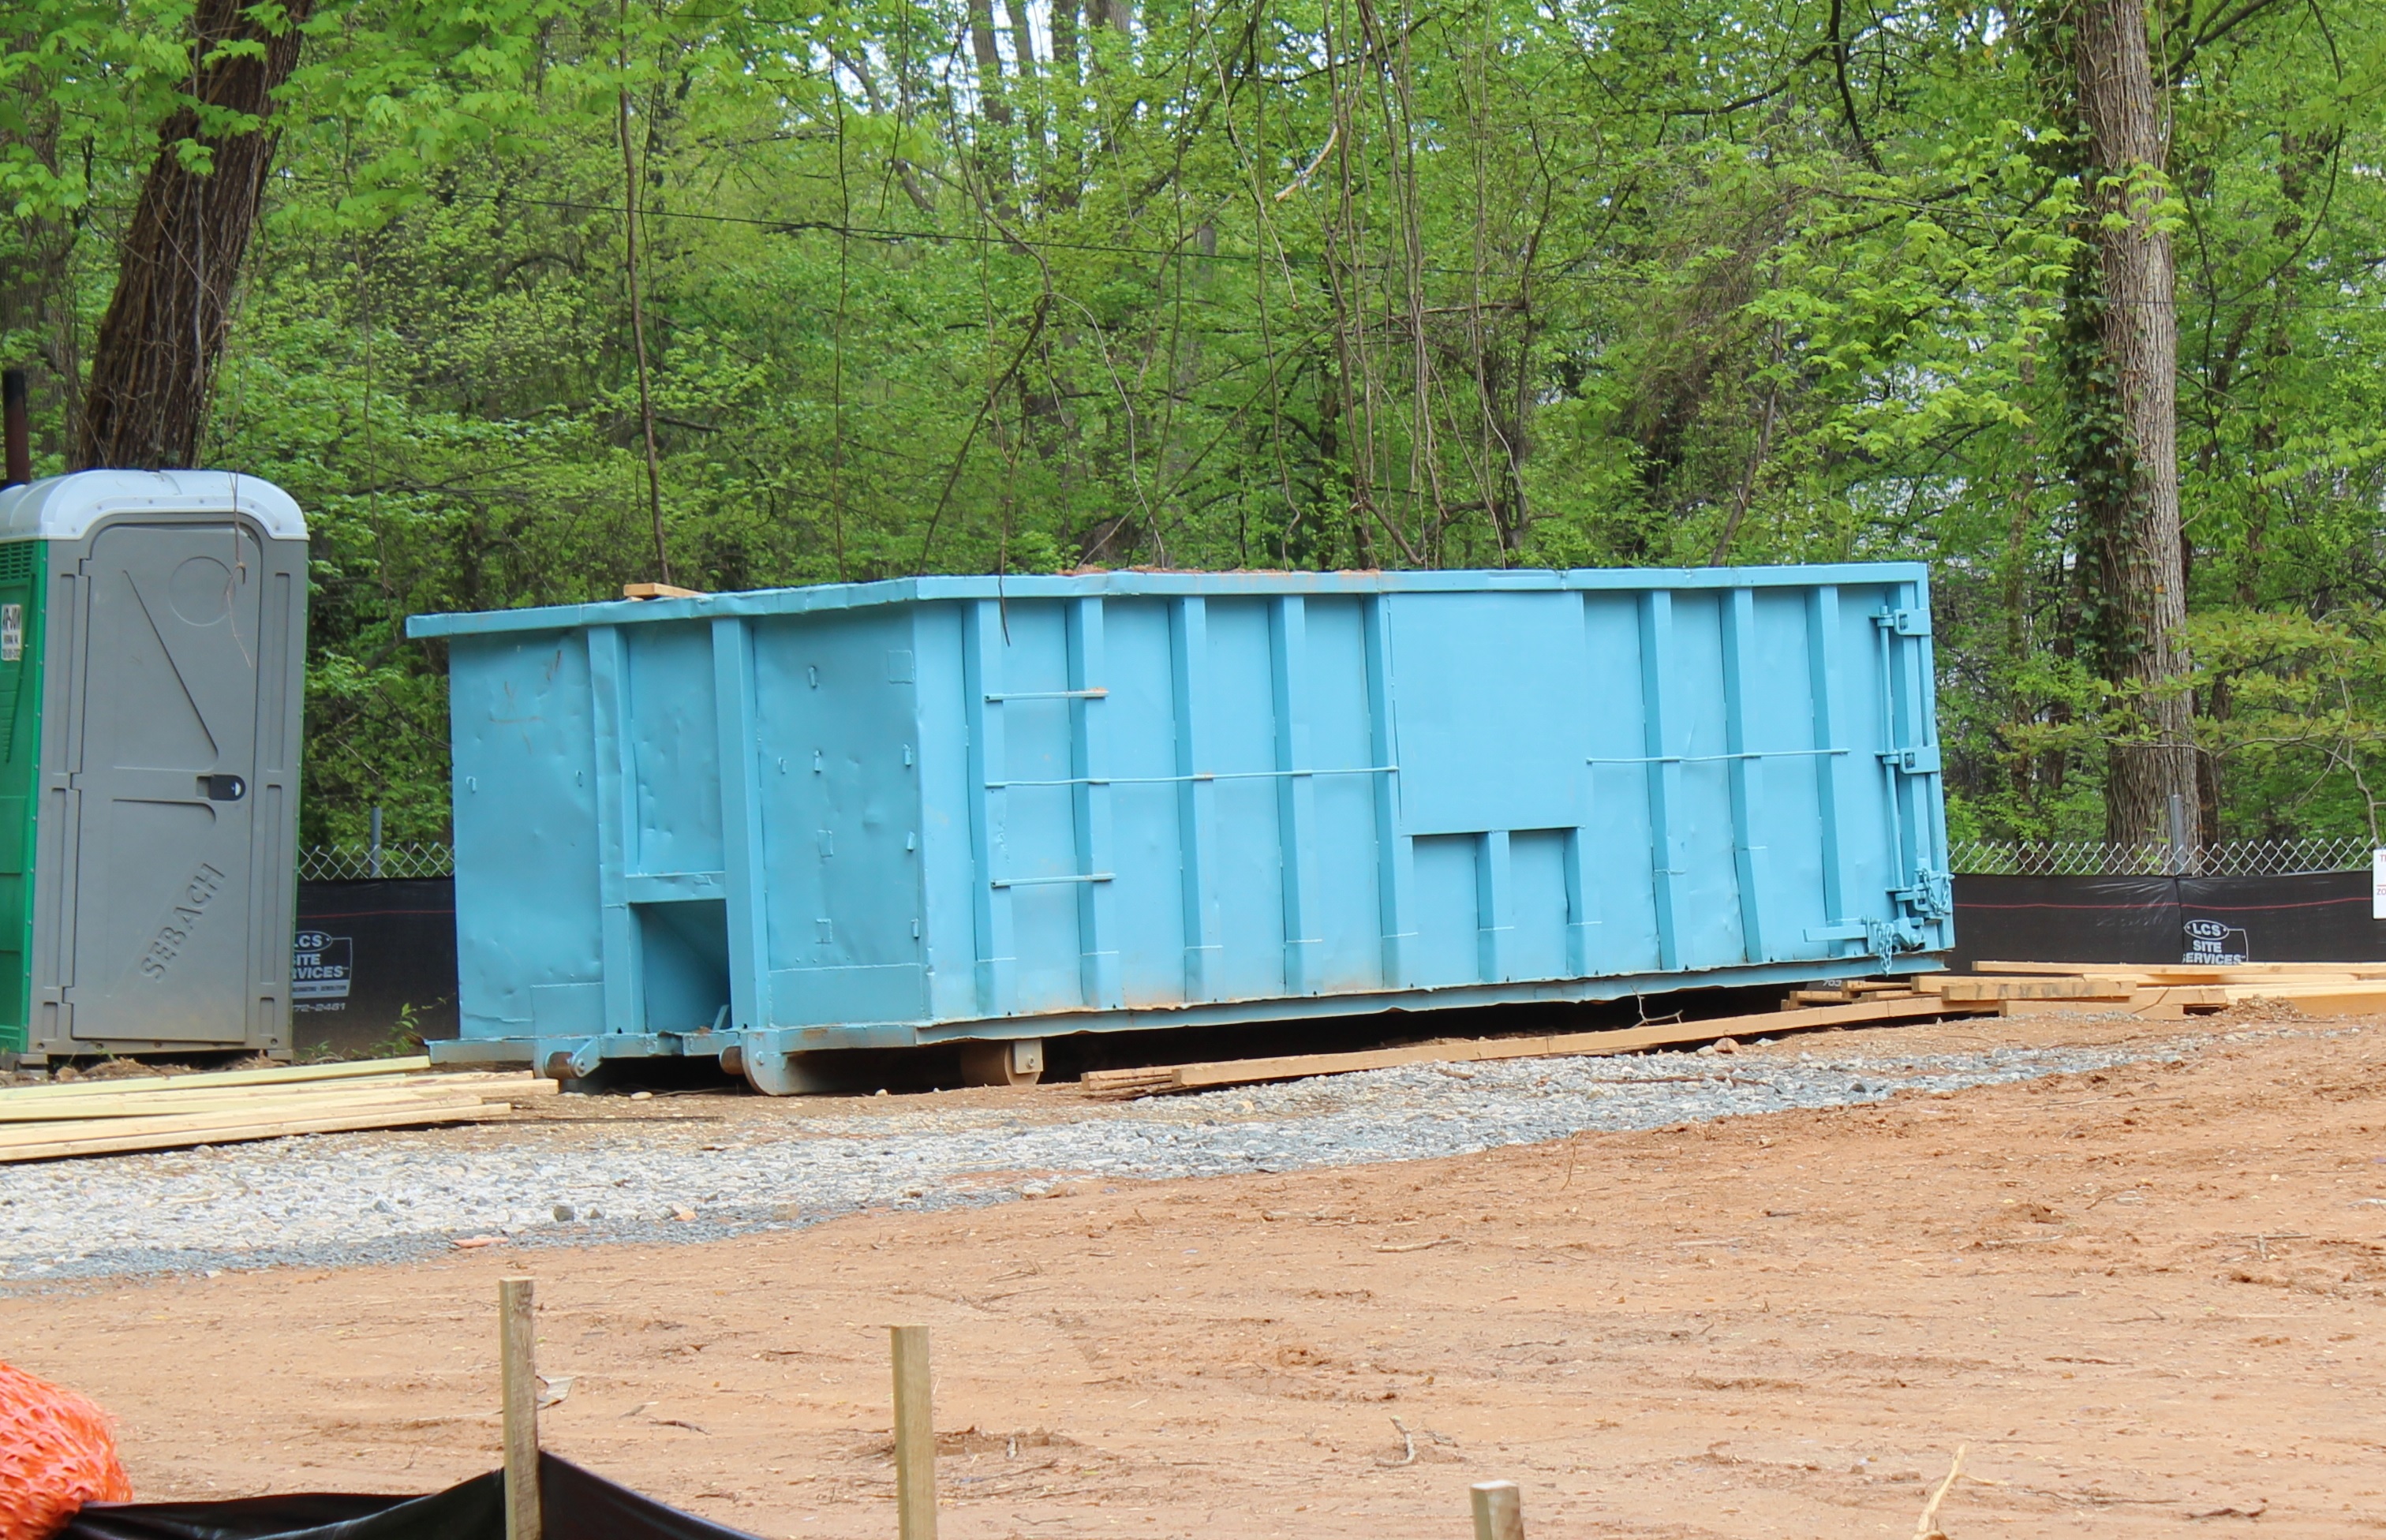 Dumpster Rental in Gwinnett County. This is a 30yd rolloff dumpster.